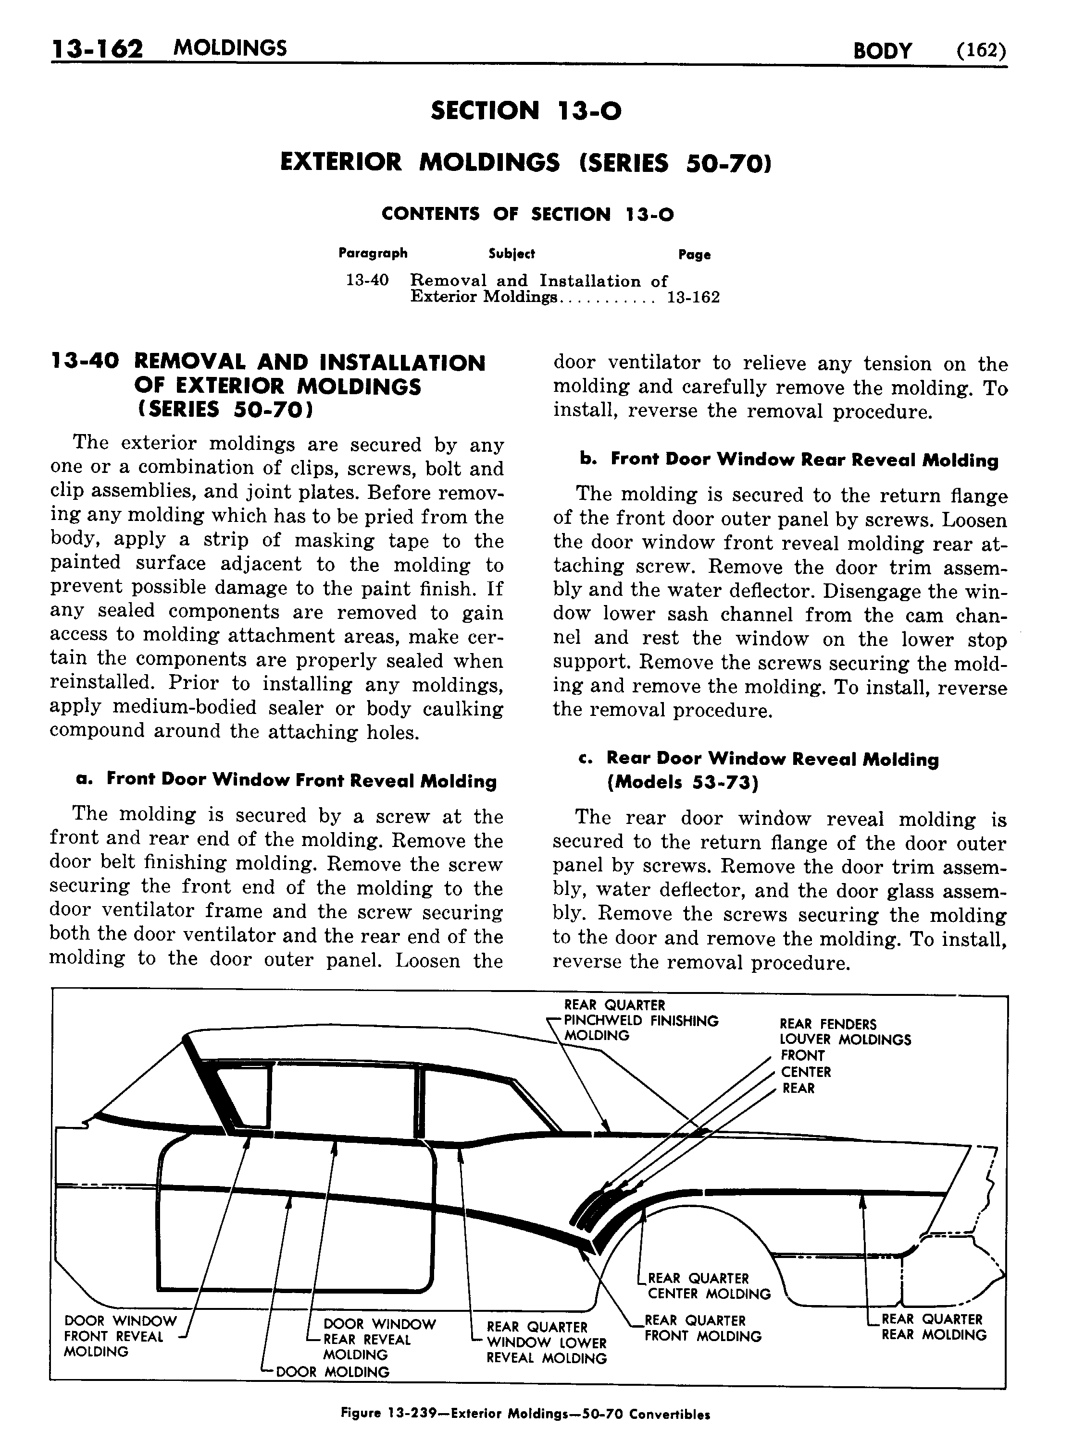 n_1957 Buick Body Service Manual-164-164.jpg